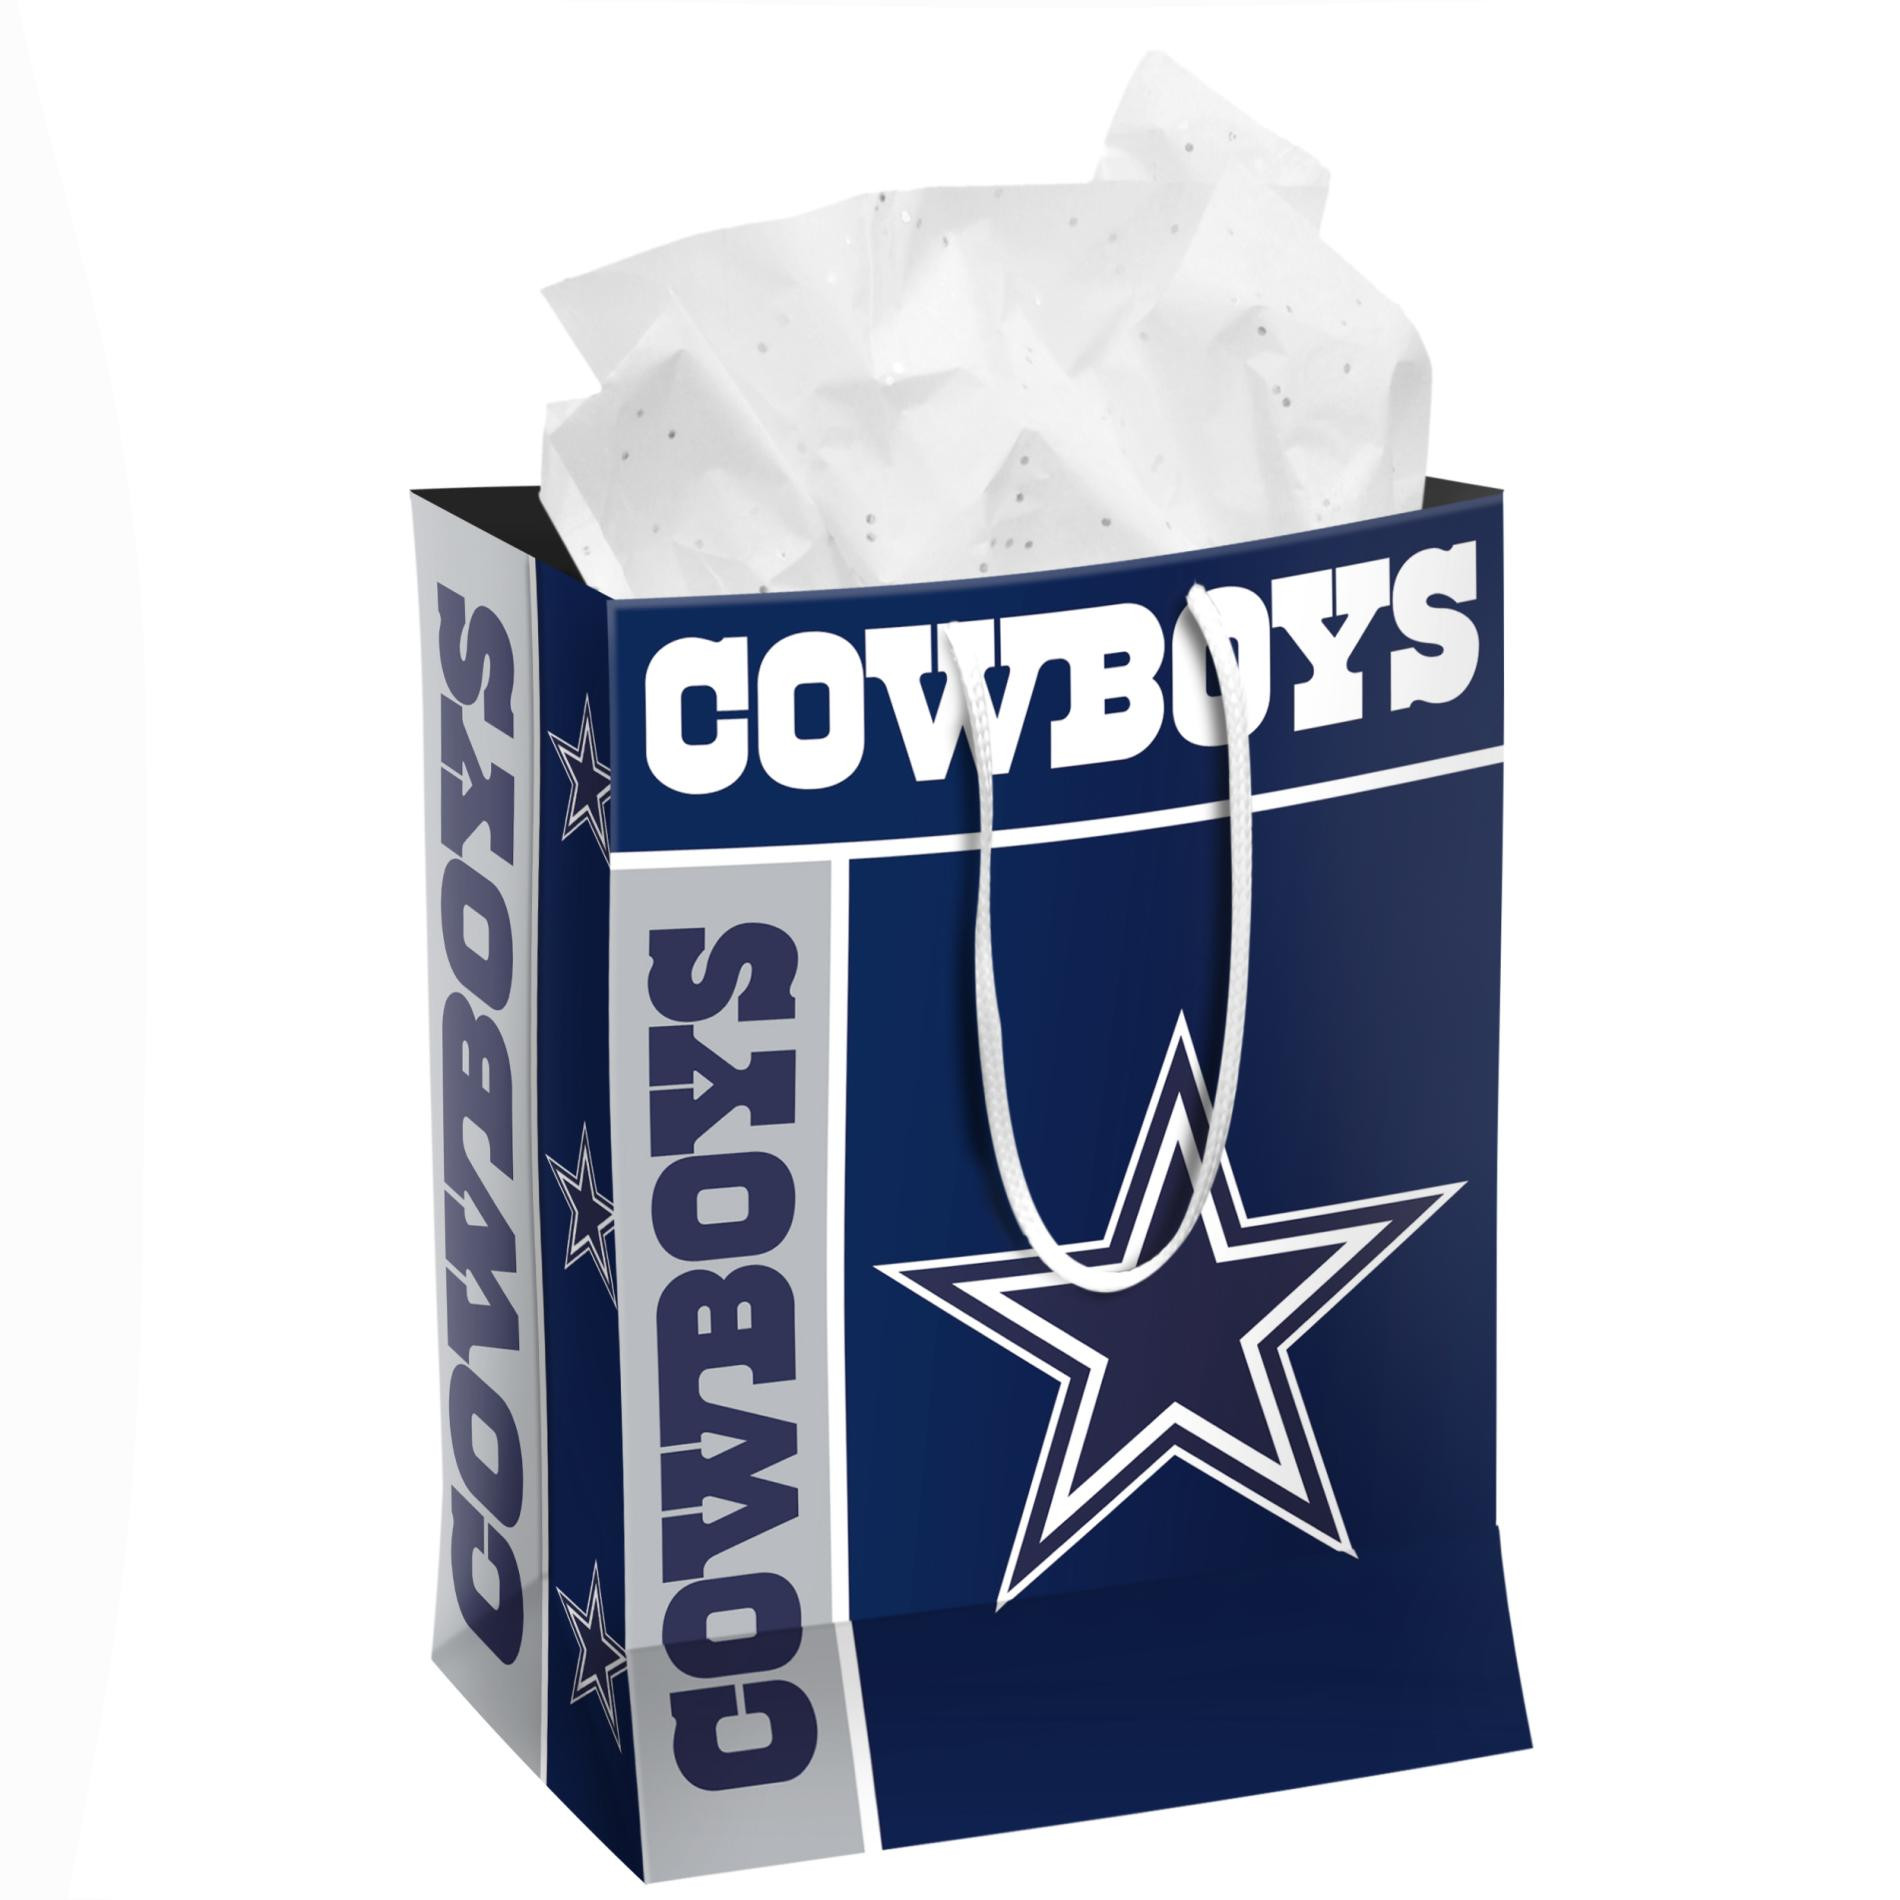 Gift Ideas For Cowboys
 NFL Gift Bag Dallas Cowboys